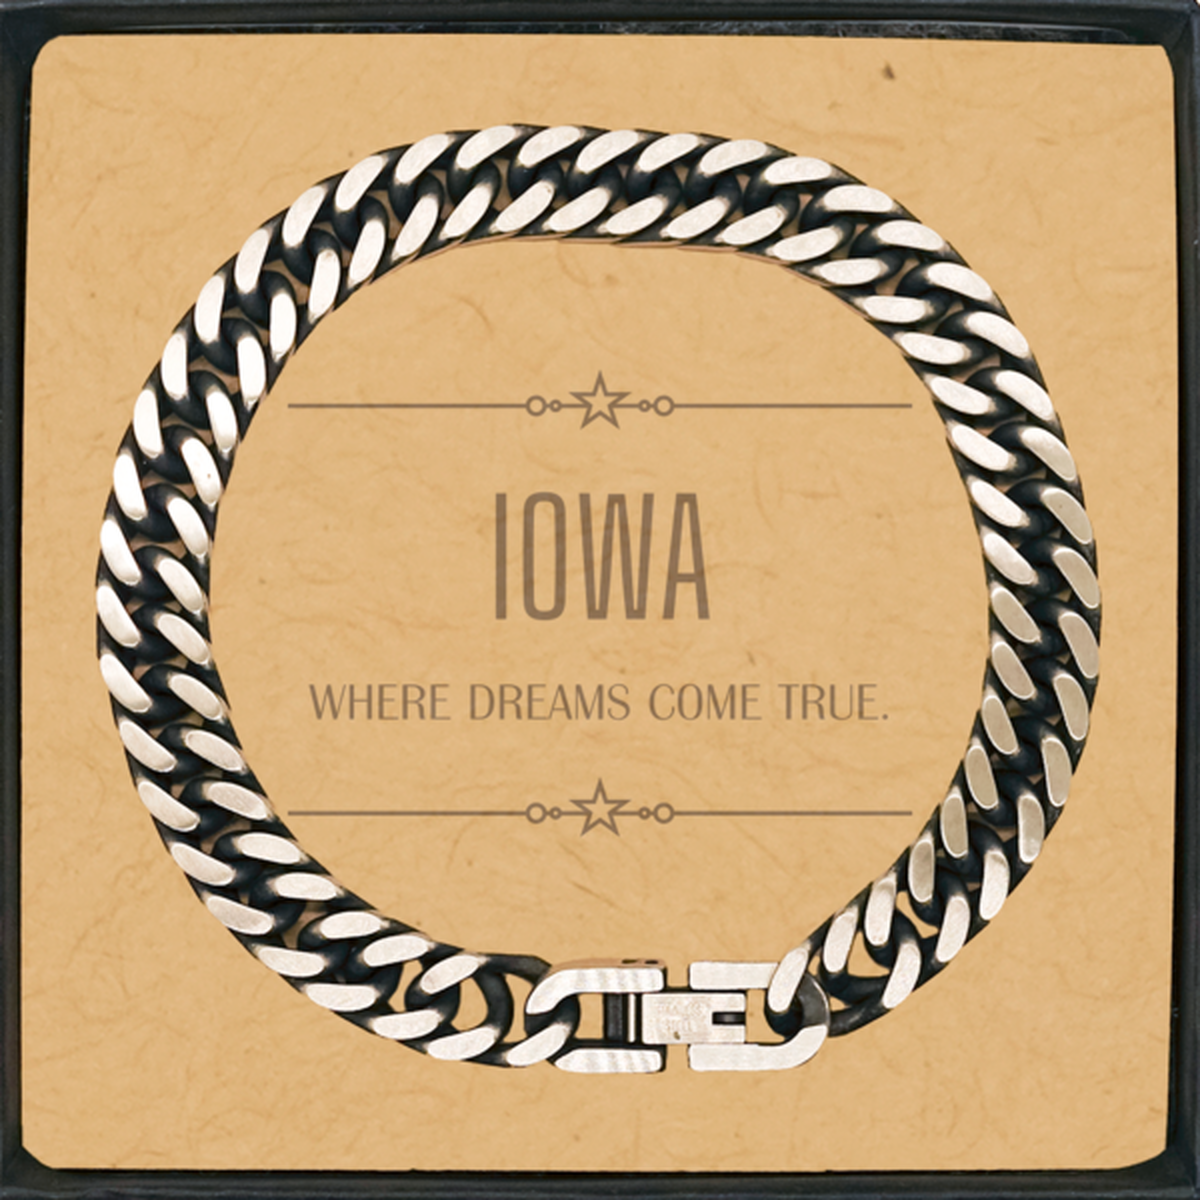 Love Iowa State Cuban Link Chain Bracelet, Iowa Where dreams come true, Birthday Inspirational Gifts For Iowa Men, Women, Friends